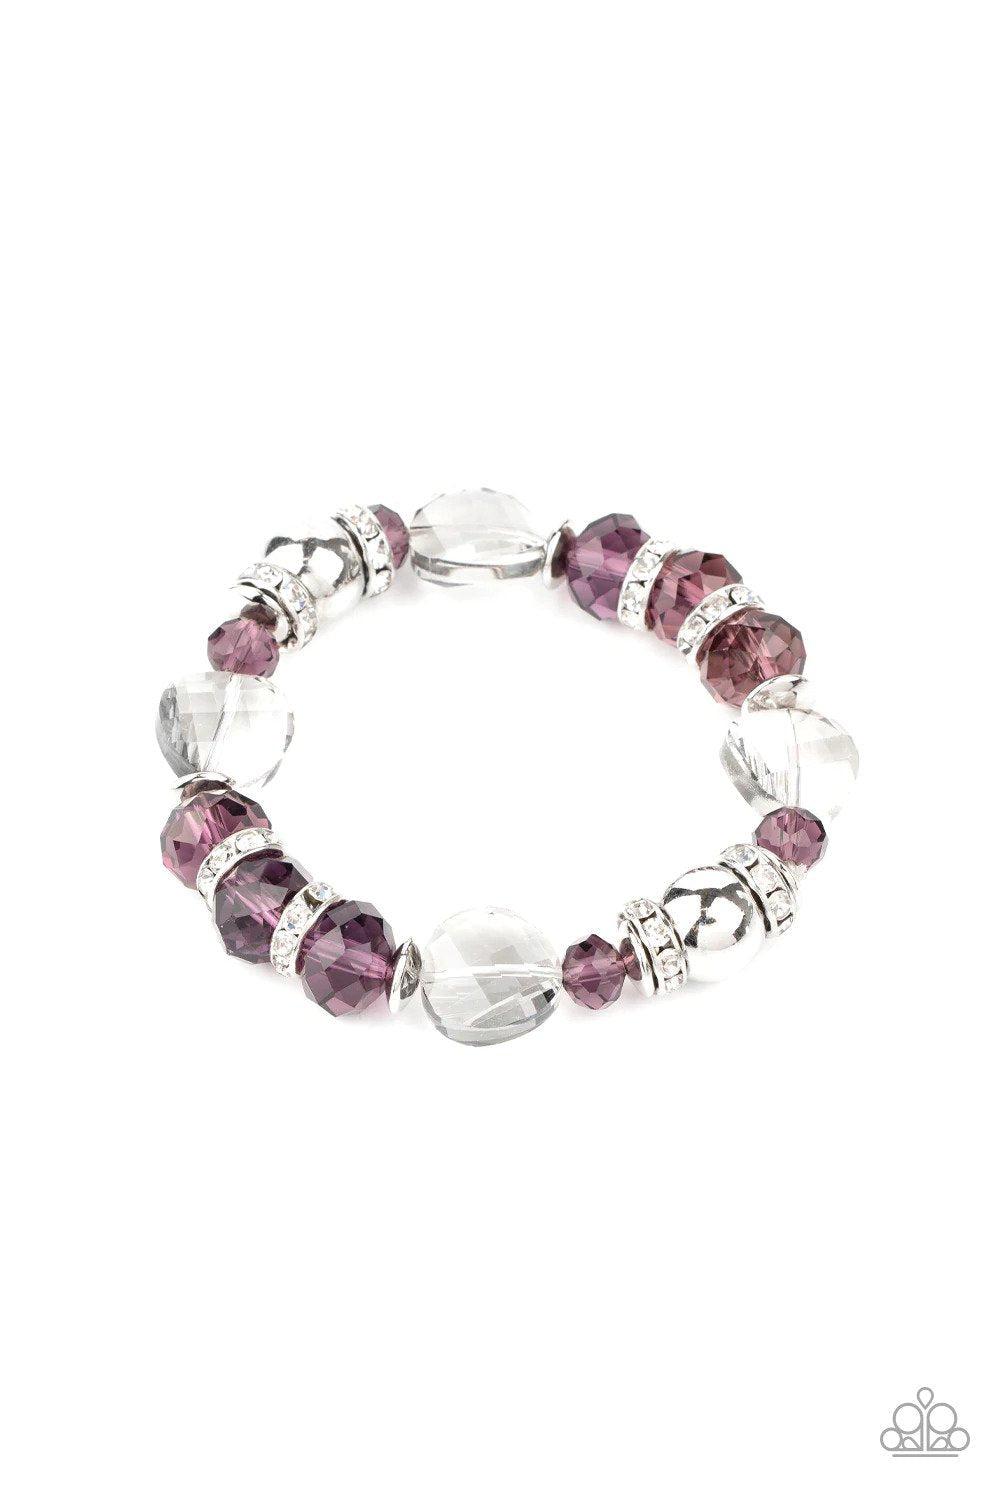 Treat Yourself Purple &amp; White Bracelet - Paparazzi Accessories- lightbox - CarasShop.com - $5 Jewelry by Cara Jewels